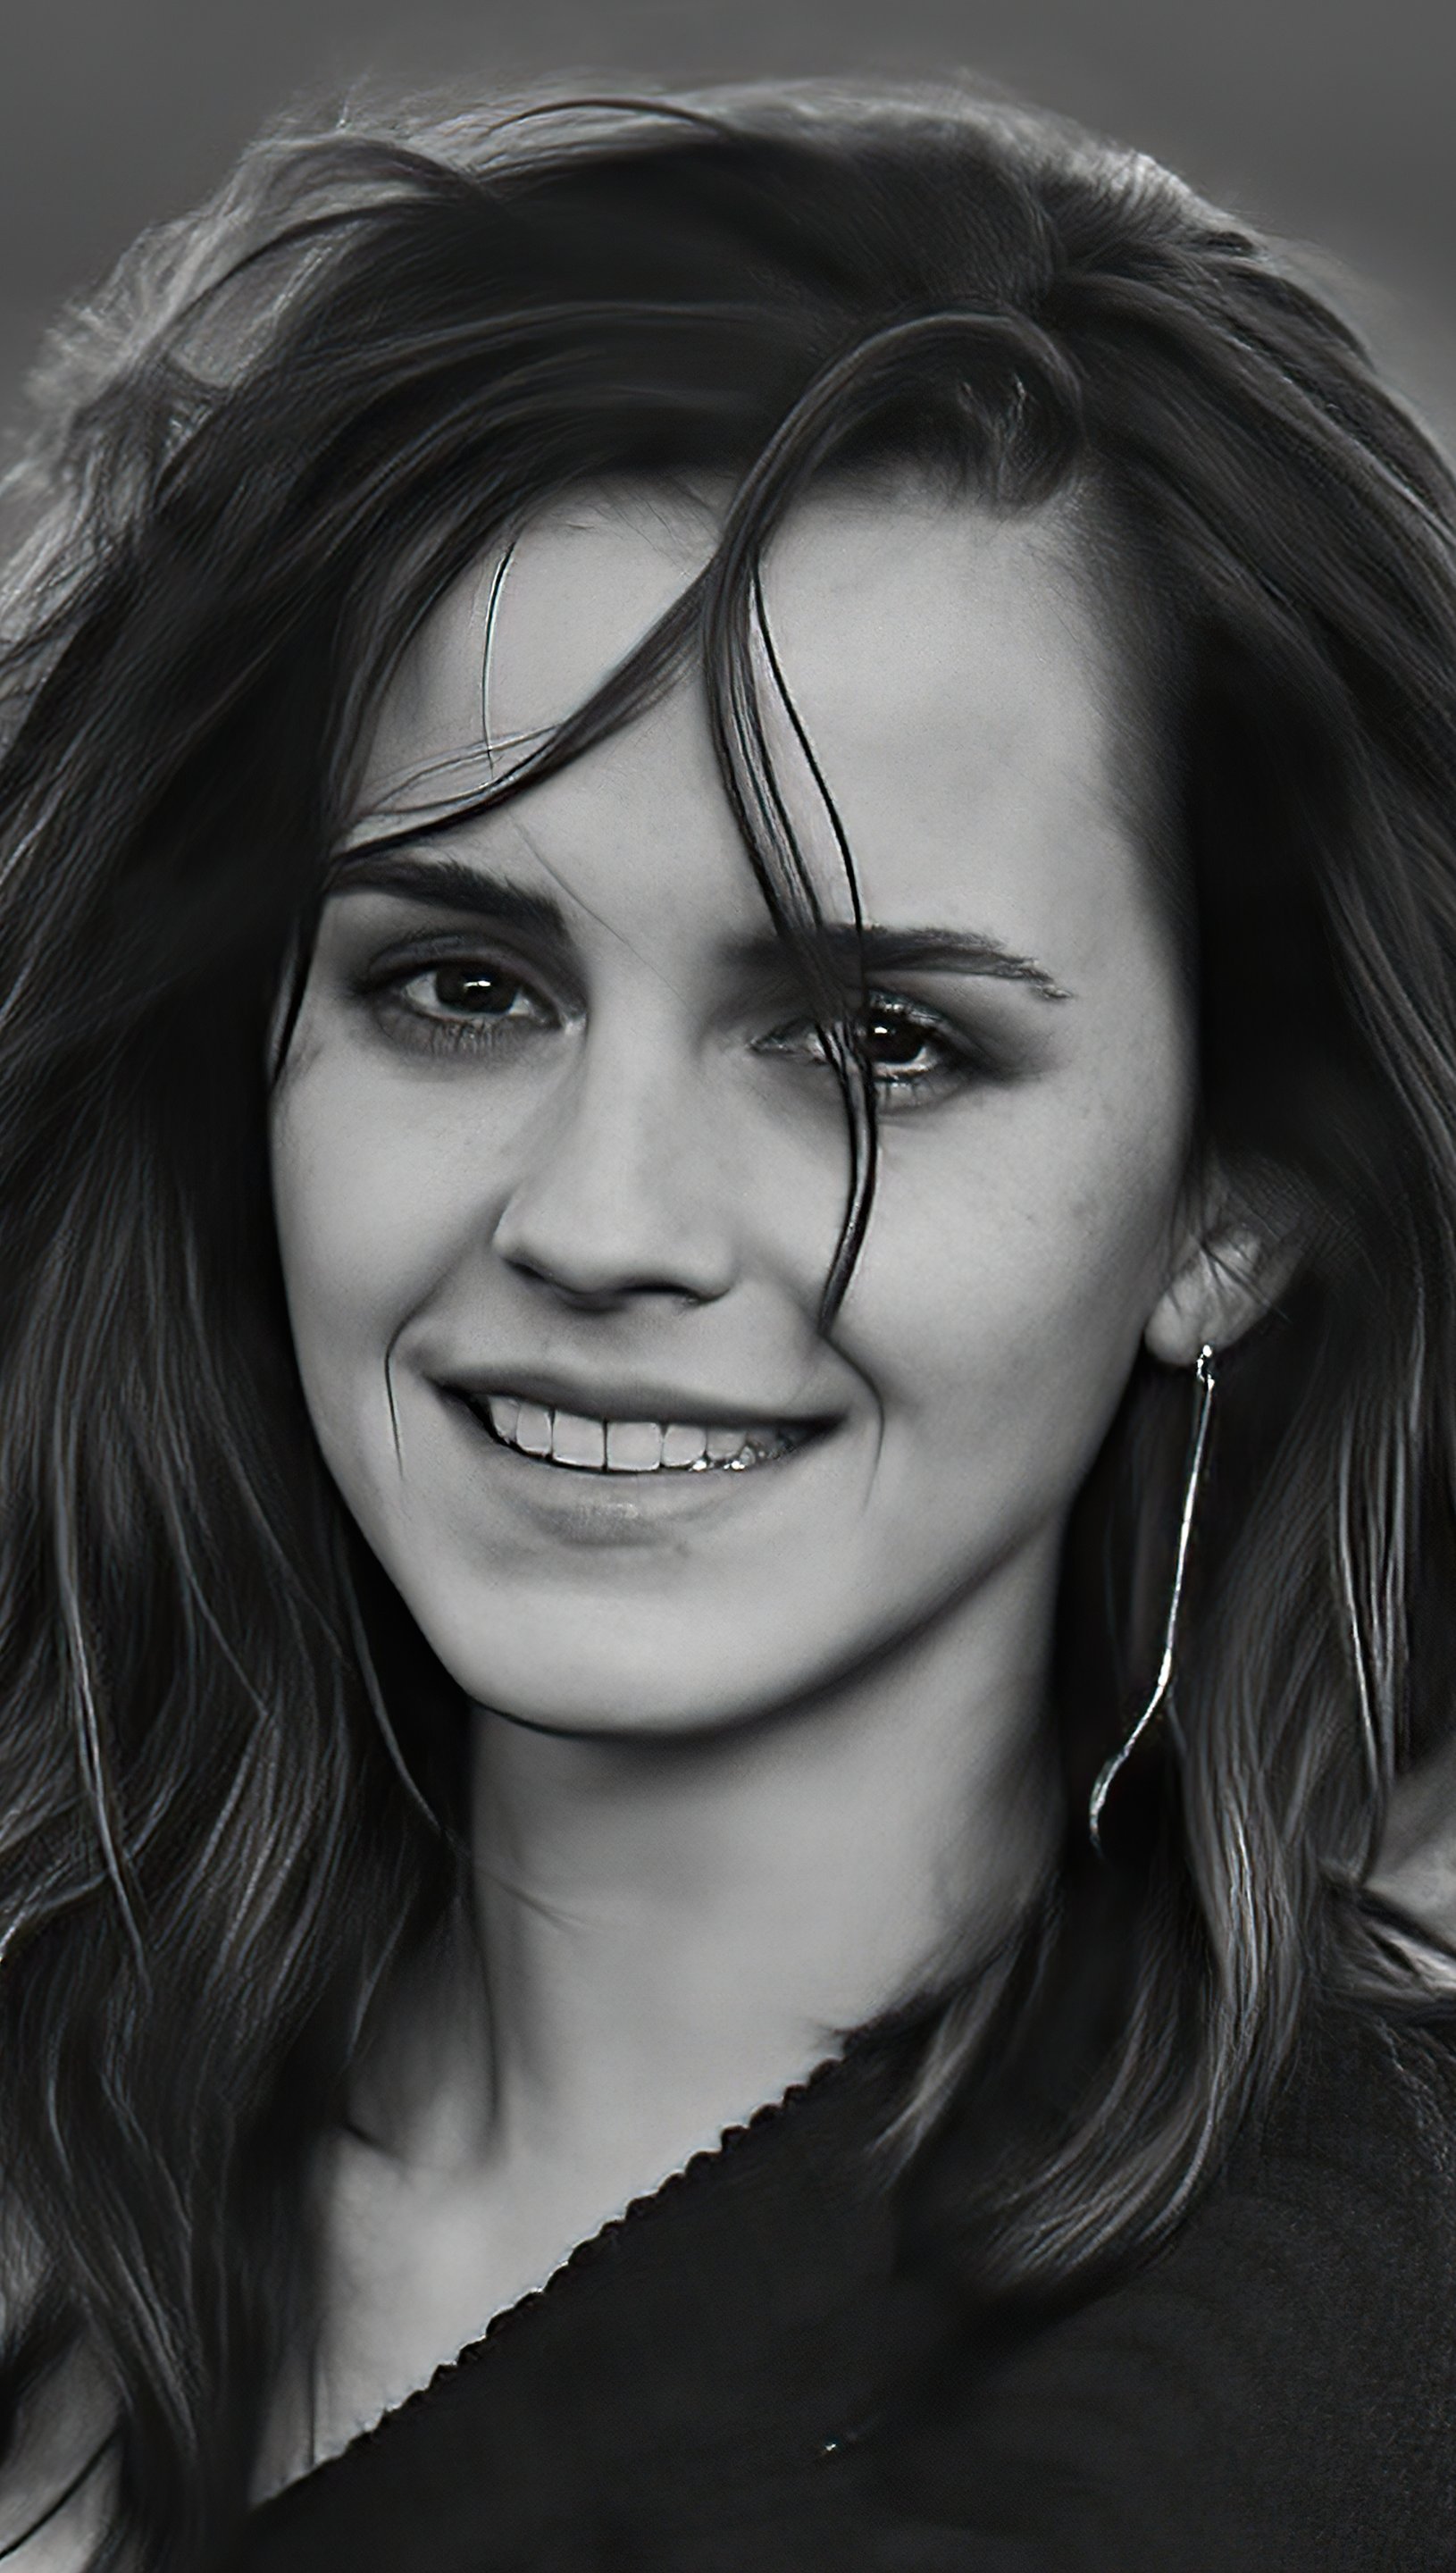 Wallpaper Emma Watson Monochrome Vertical